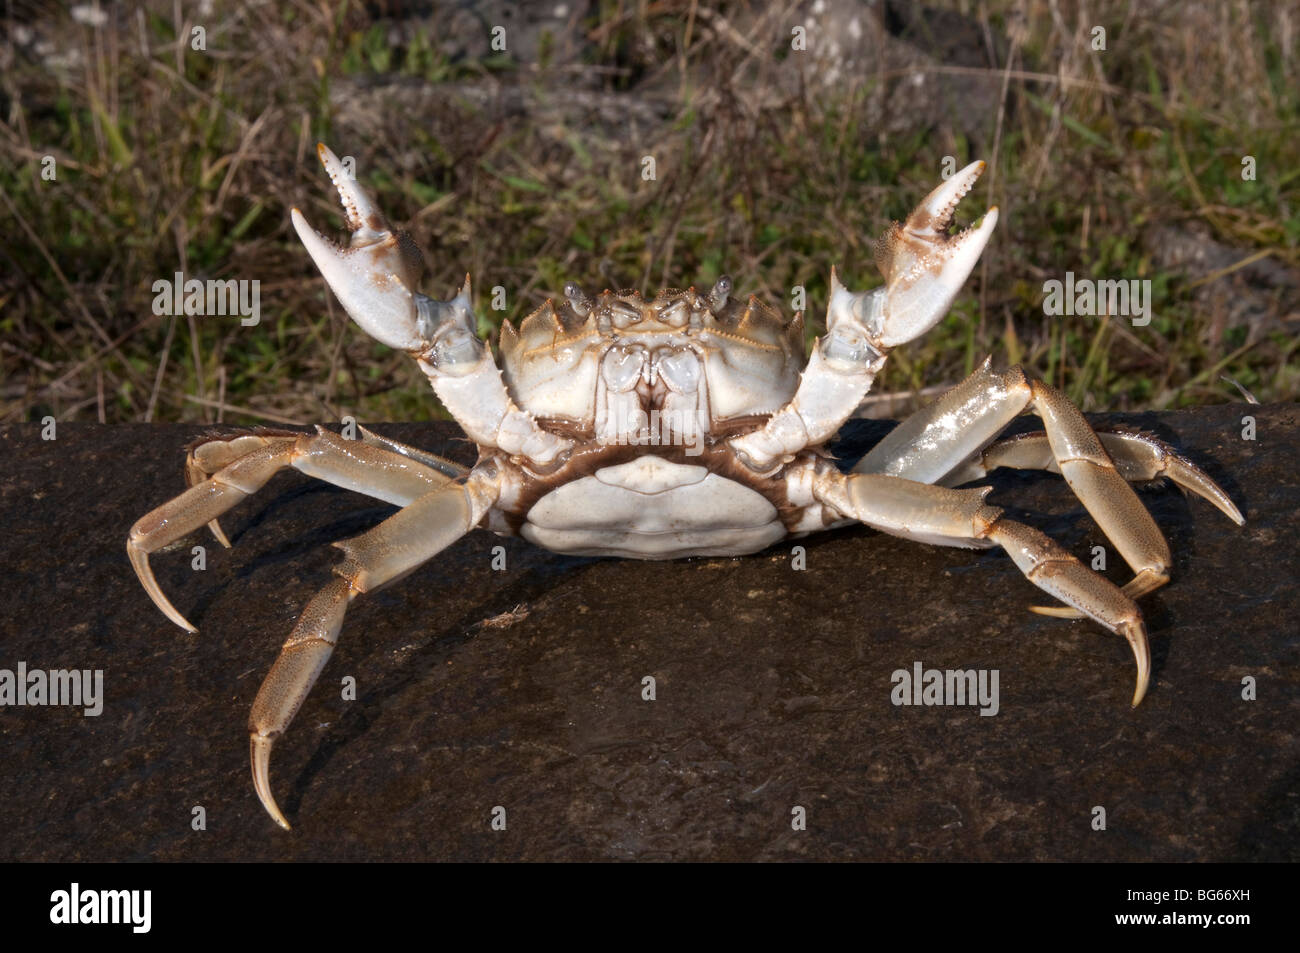 Crabe chinois (Eriocheir sinensis), femme en position défensive. Banque D'Images